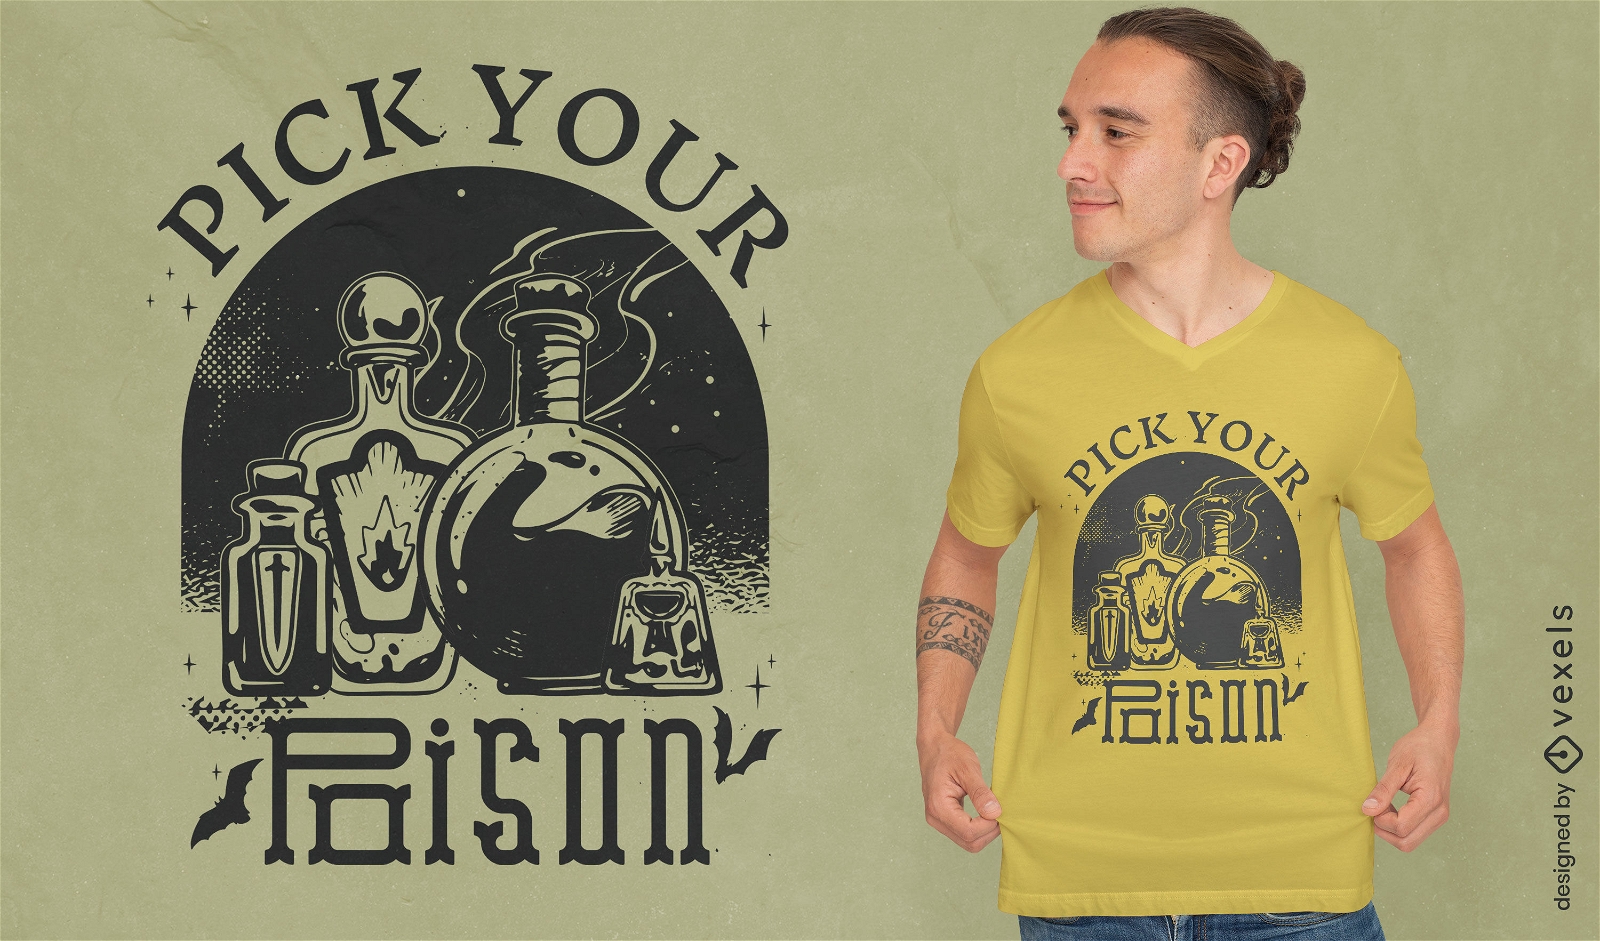 Pick your poison Halloween t-shirt design